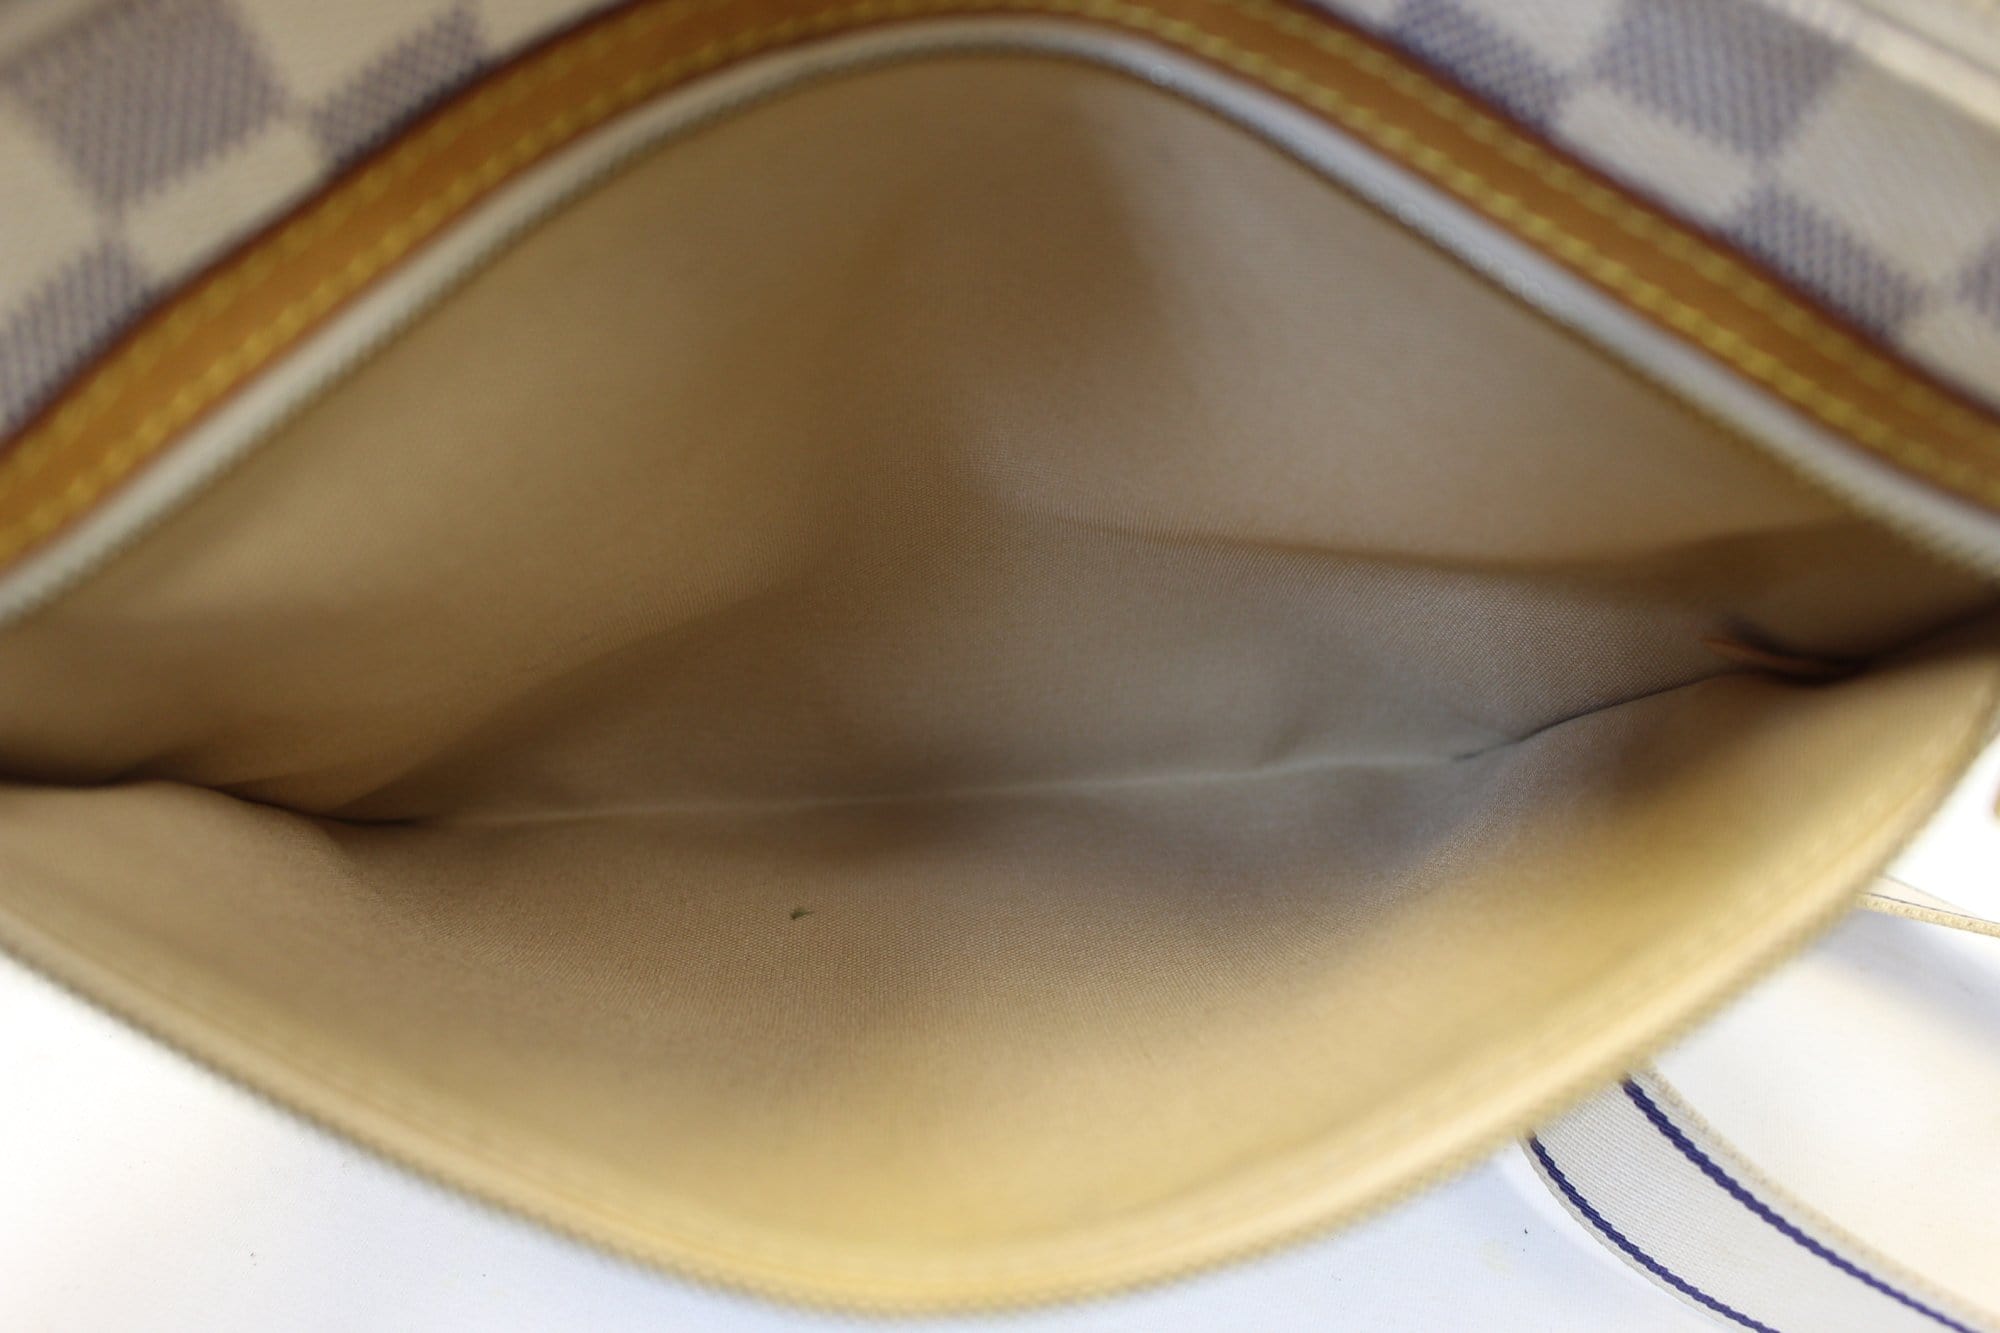 Louis Vuitton 2008 Pre-owned Pochette Bosphore Crossbody Bag - Brown